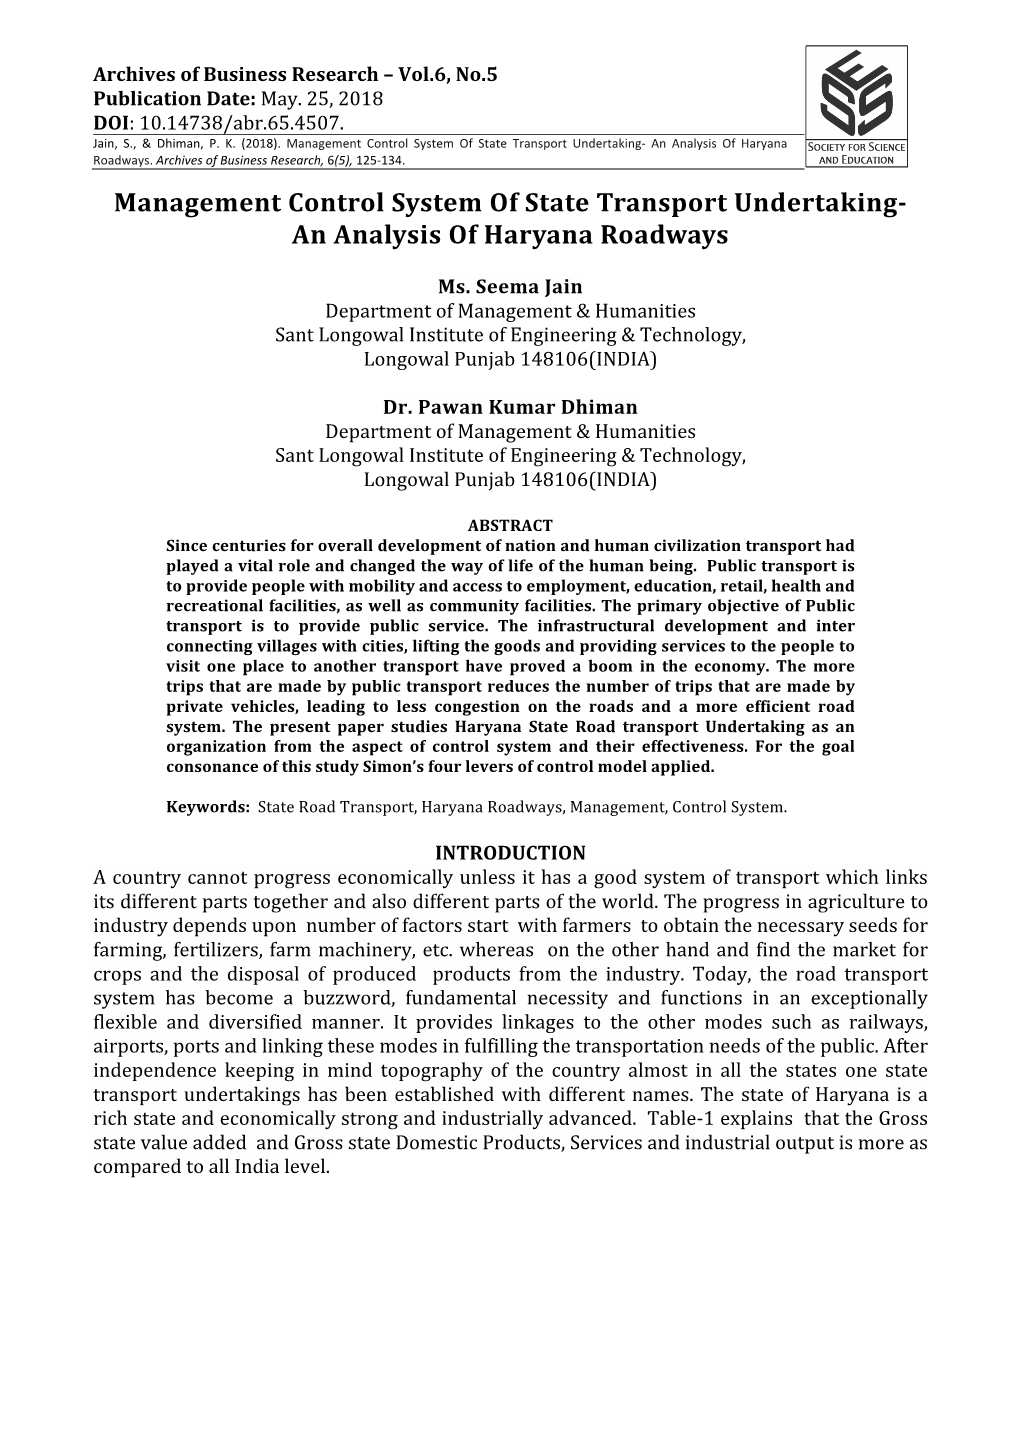 An Analysis of Haryana Roadways